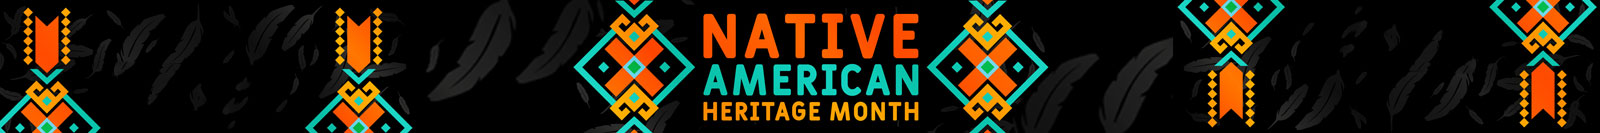 Celebrating Native American Heritage Month